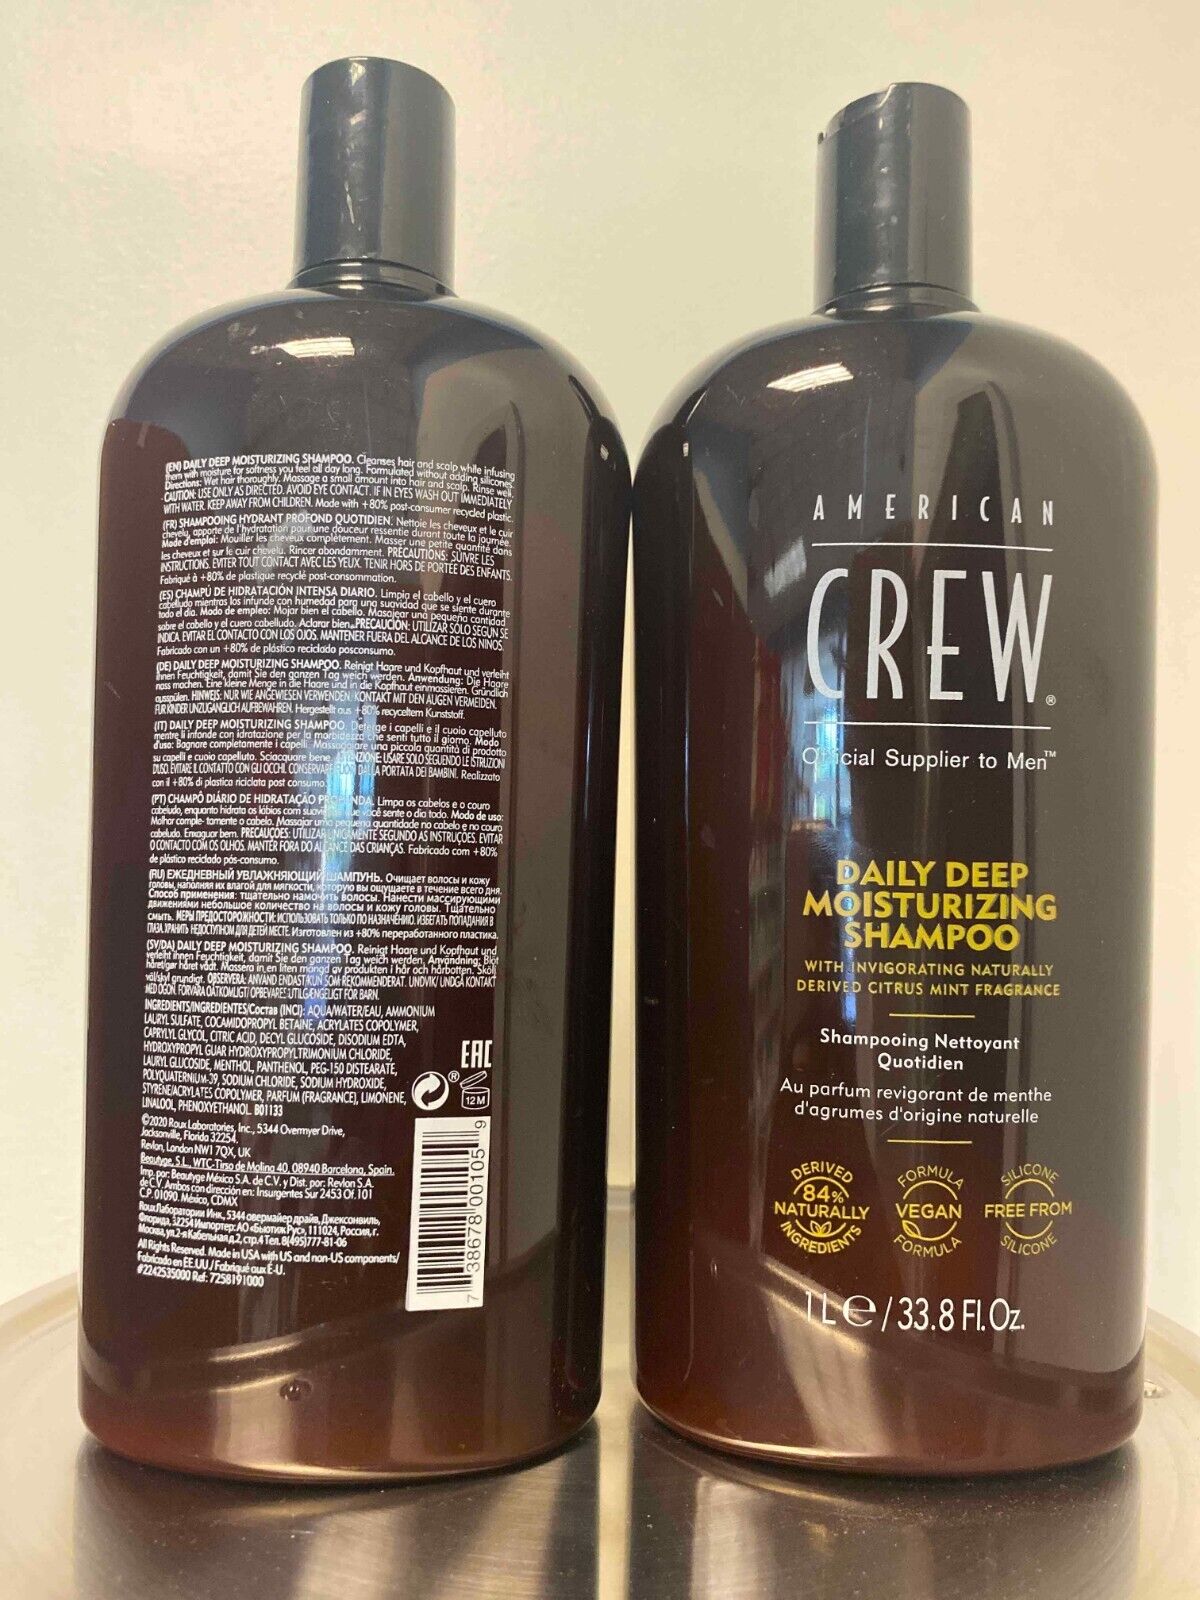 | OZ/ FL Moisturizing DAILY 2" Liter OF Shampoo Crew American 1 eBay 33.8 "PACK - DEEP